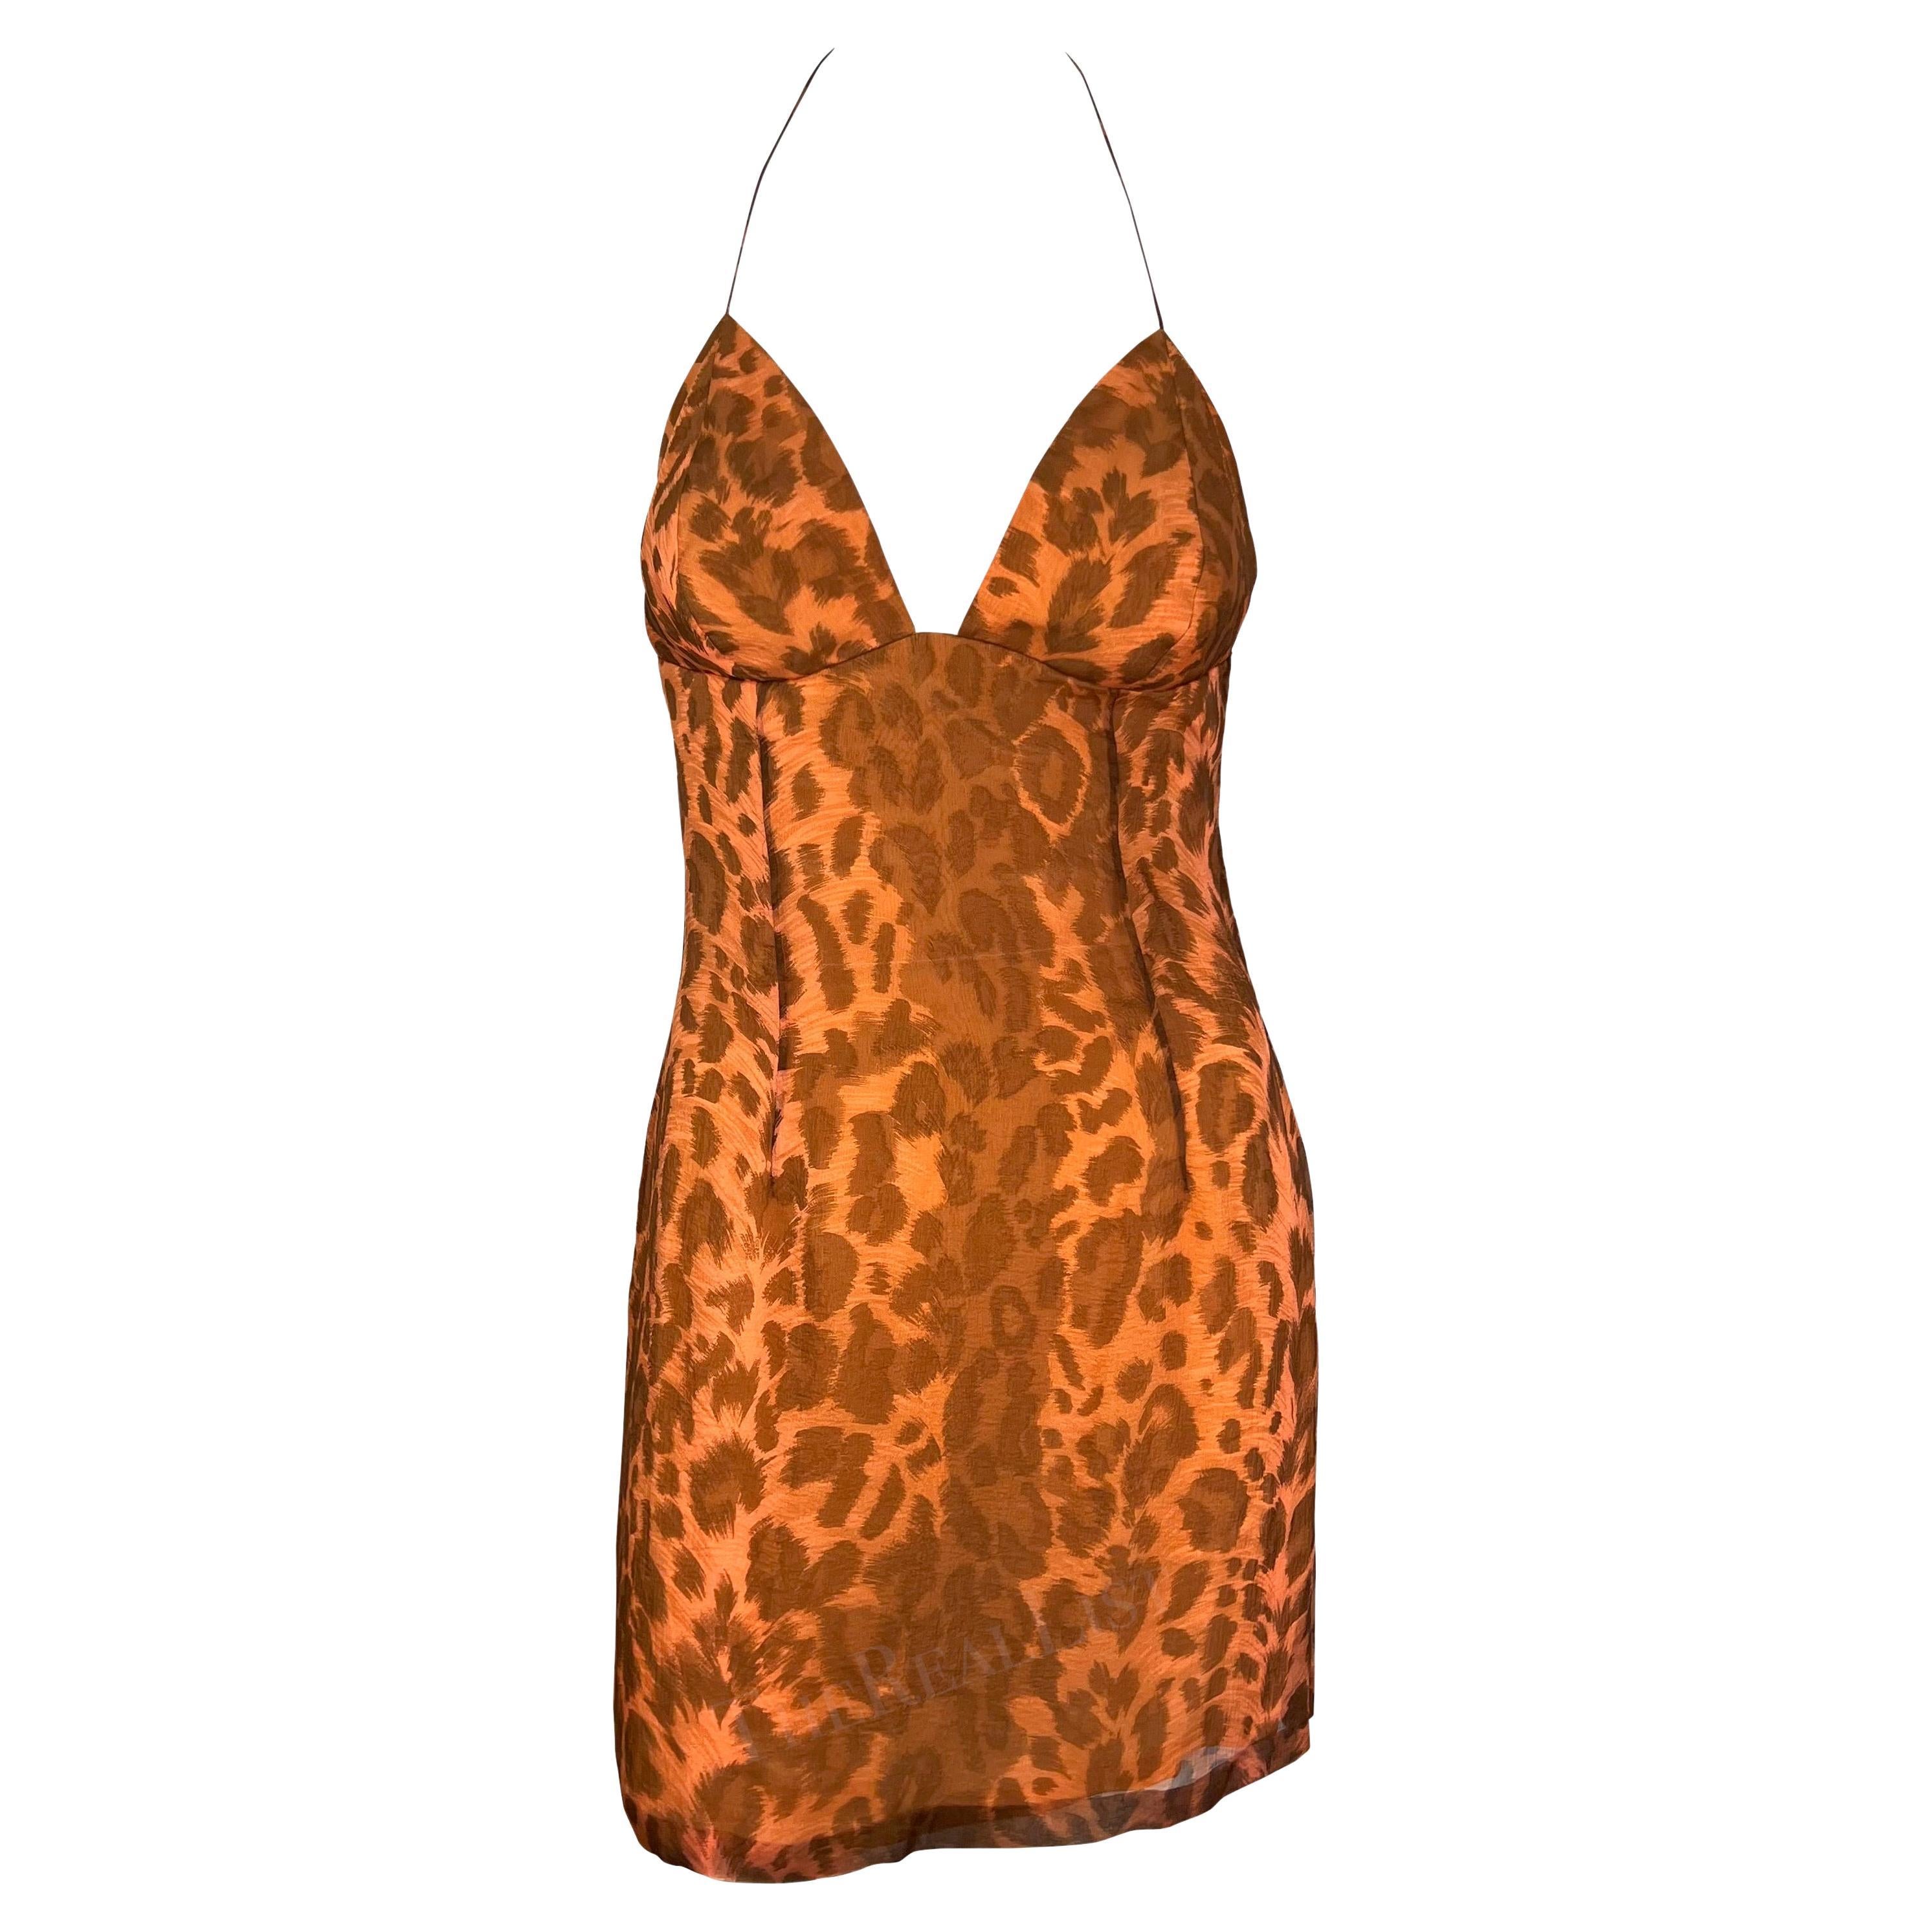 S/S 1997 Jacques Fath Runway Orange Cheetah Print Halterneck Mini Dress For Sale